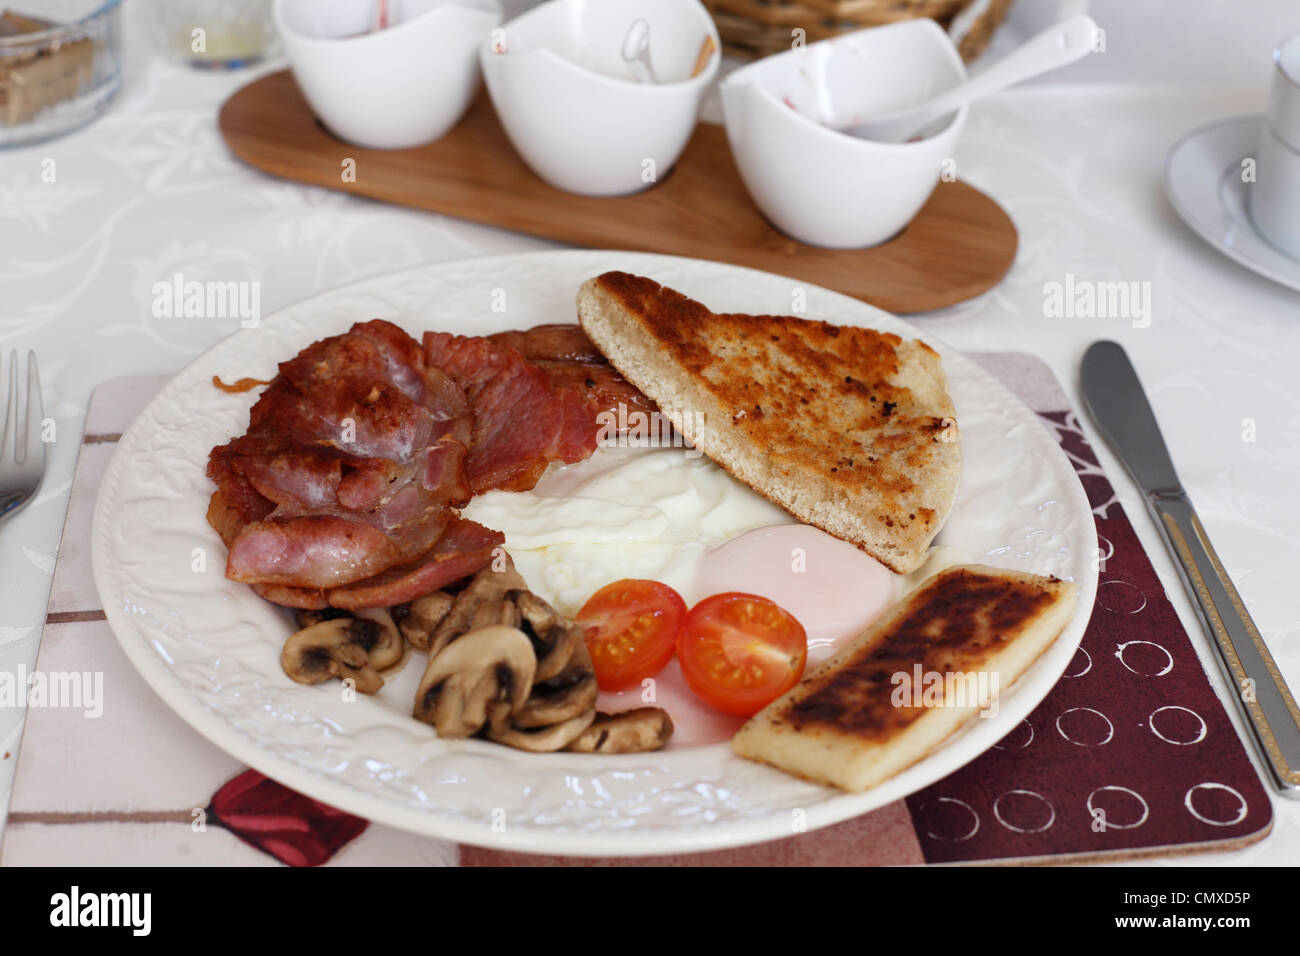 United Kingdom, Northern Ireland, Irish Breakfast in plate, close up Stock Photo